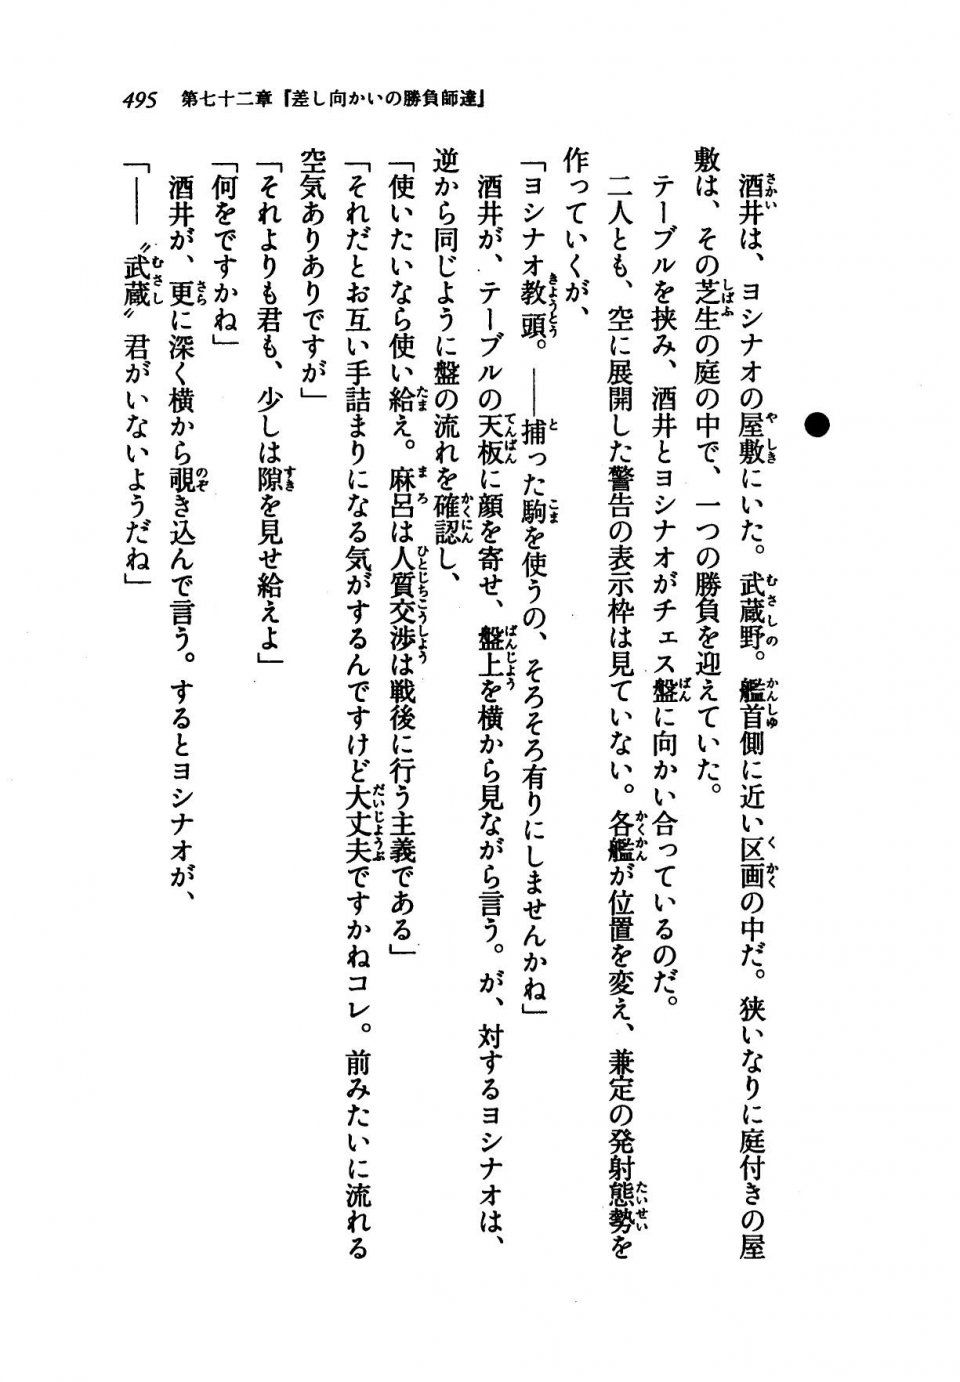 Kyoukai Senjou no Horizon LN Vol 21(8C) Part 1 - Photo #494